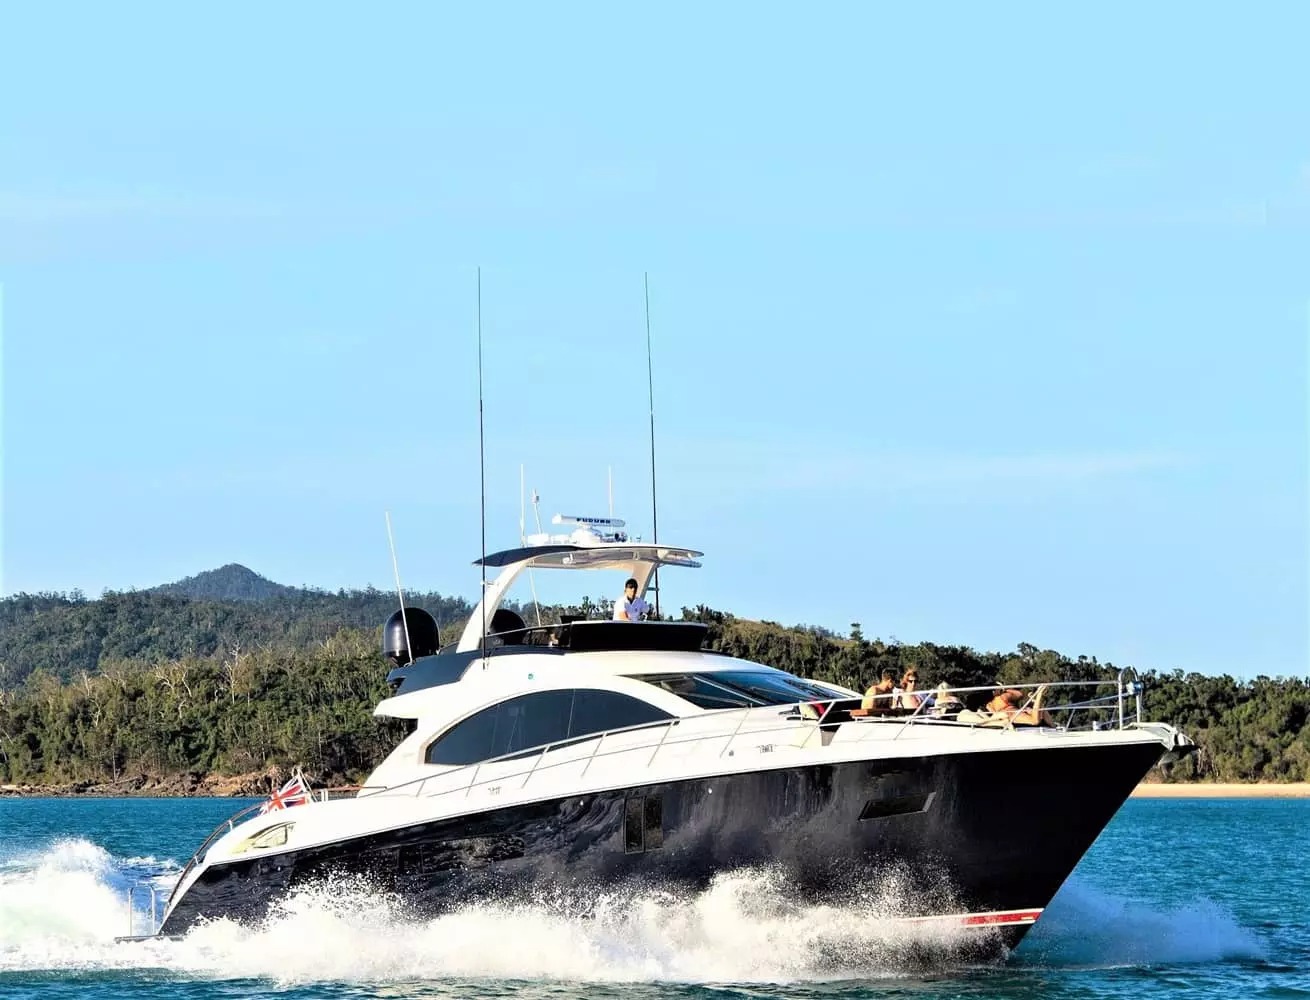 la mar luxury yacht photos